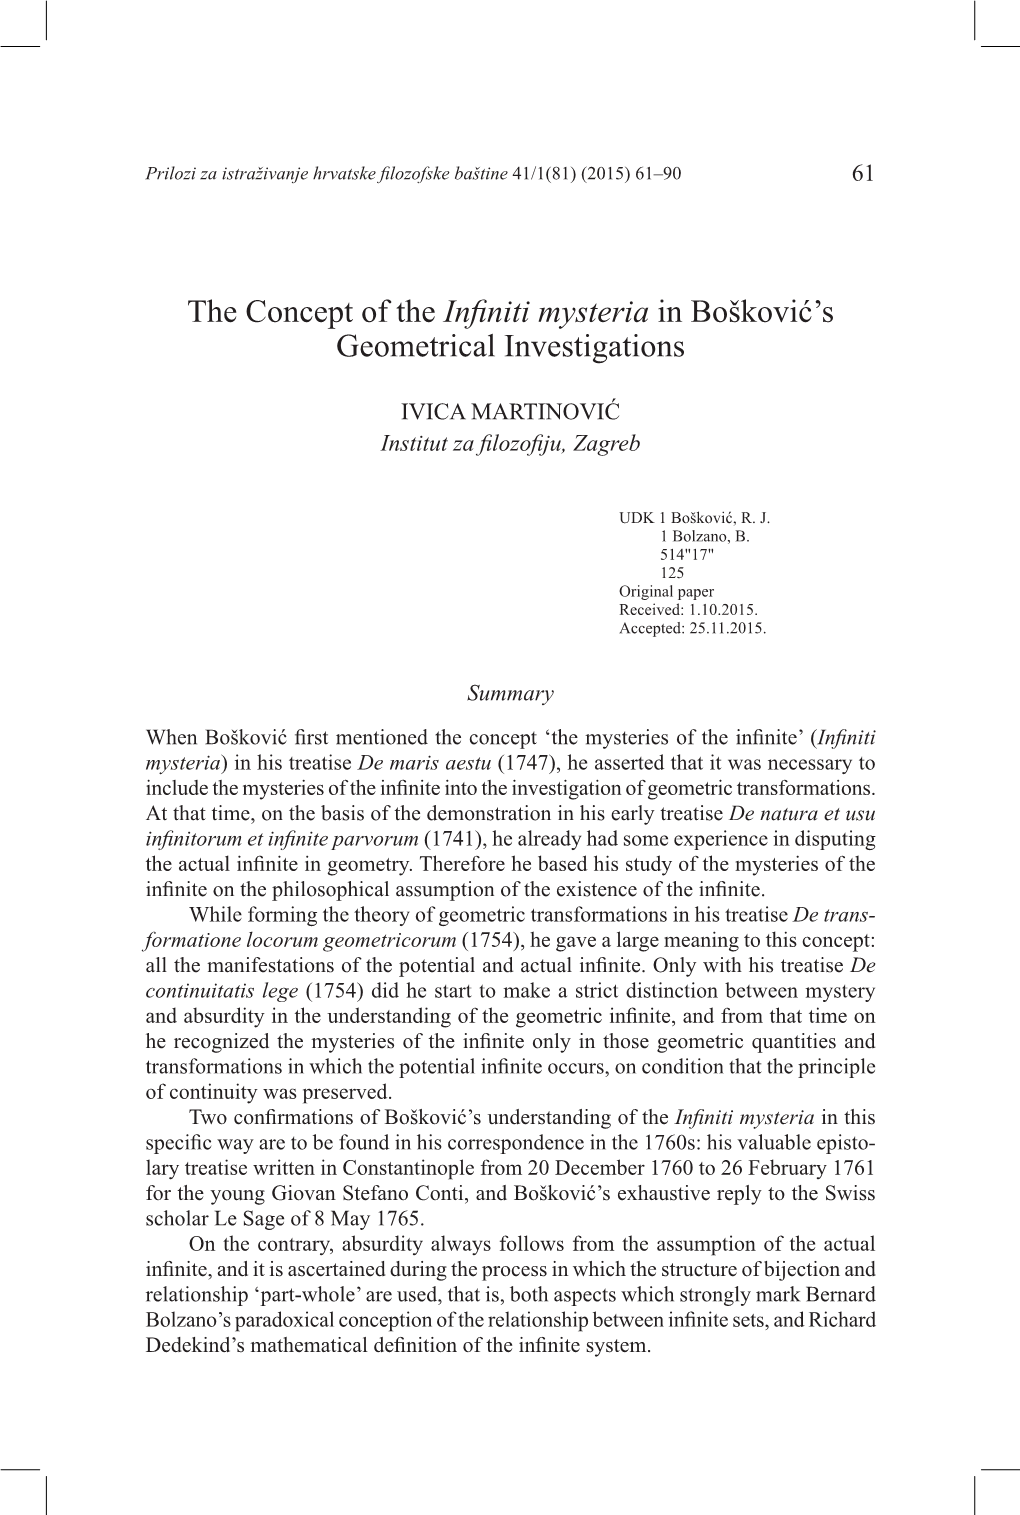 The Concept of the Infiniti Mysteria in Bošković's Geometrical Investigations